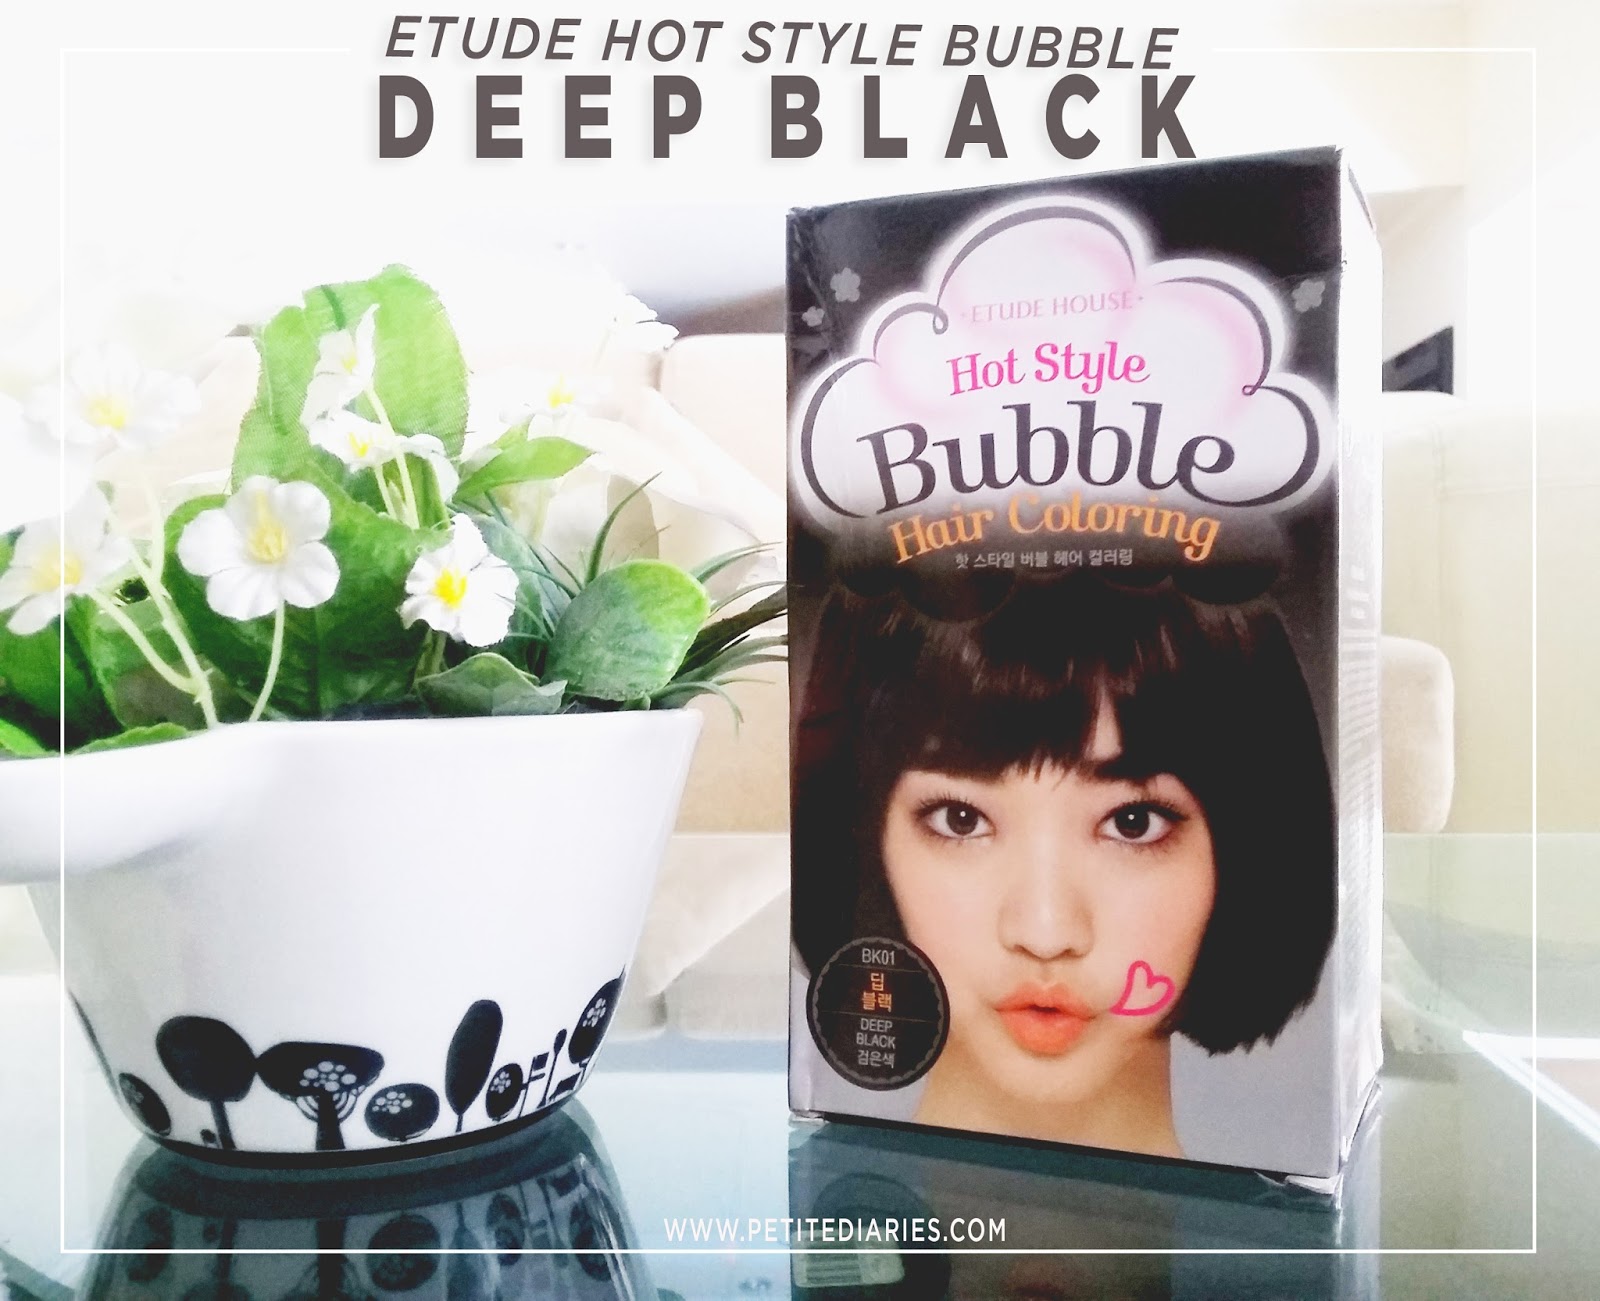 etude house deep black bubble hair coloring review